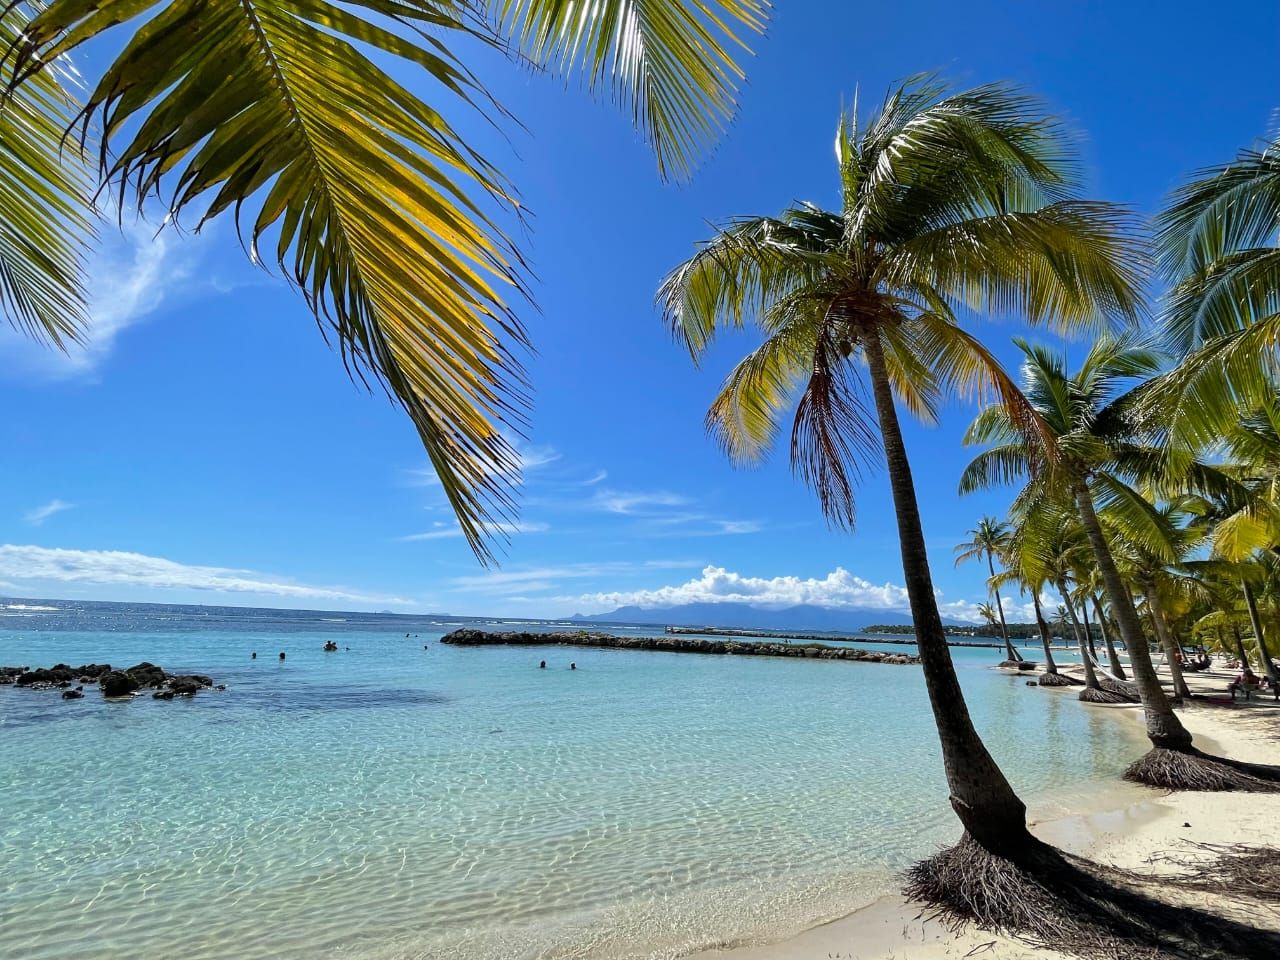 Location de vacances en bord de mer Guadeloupe